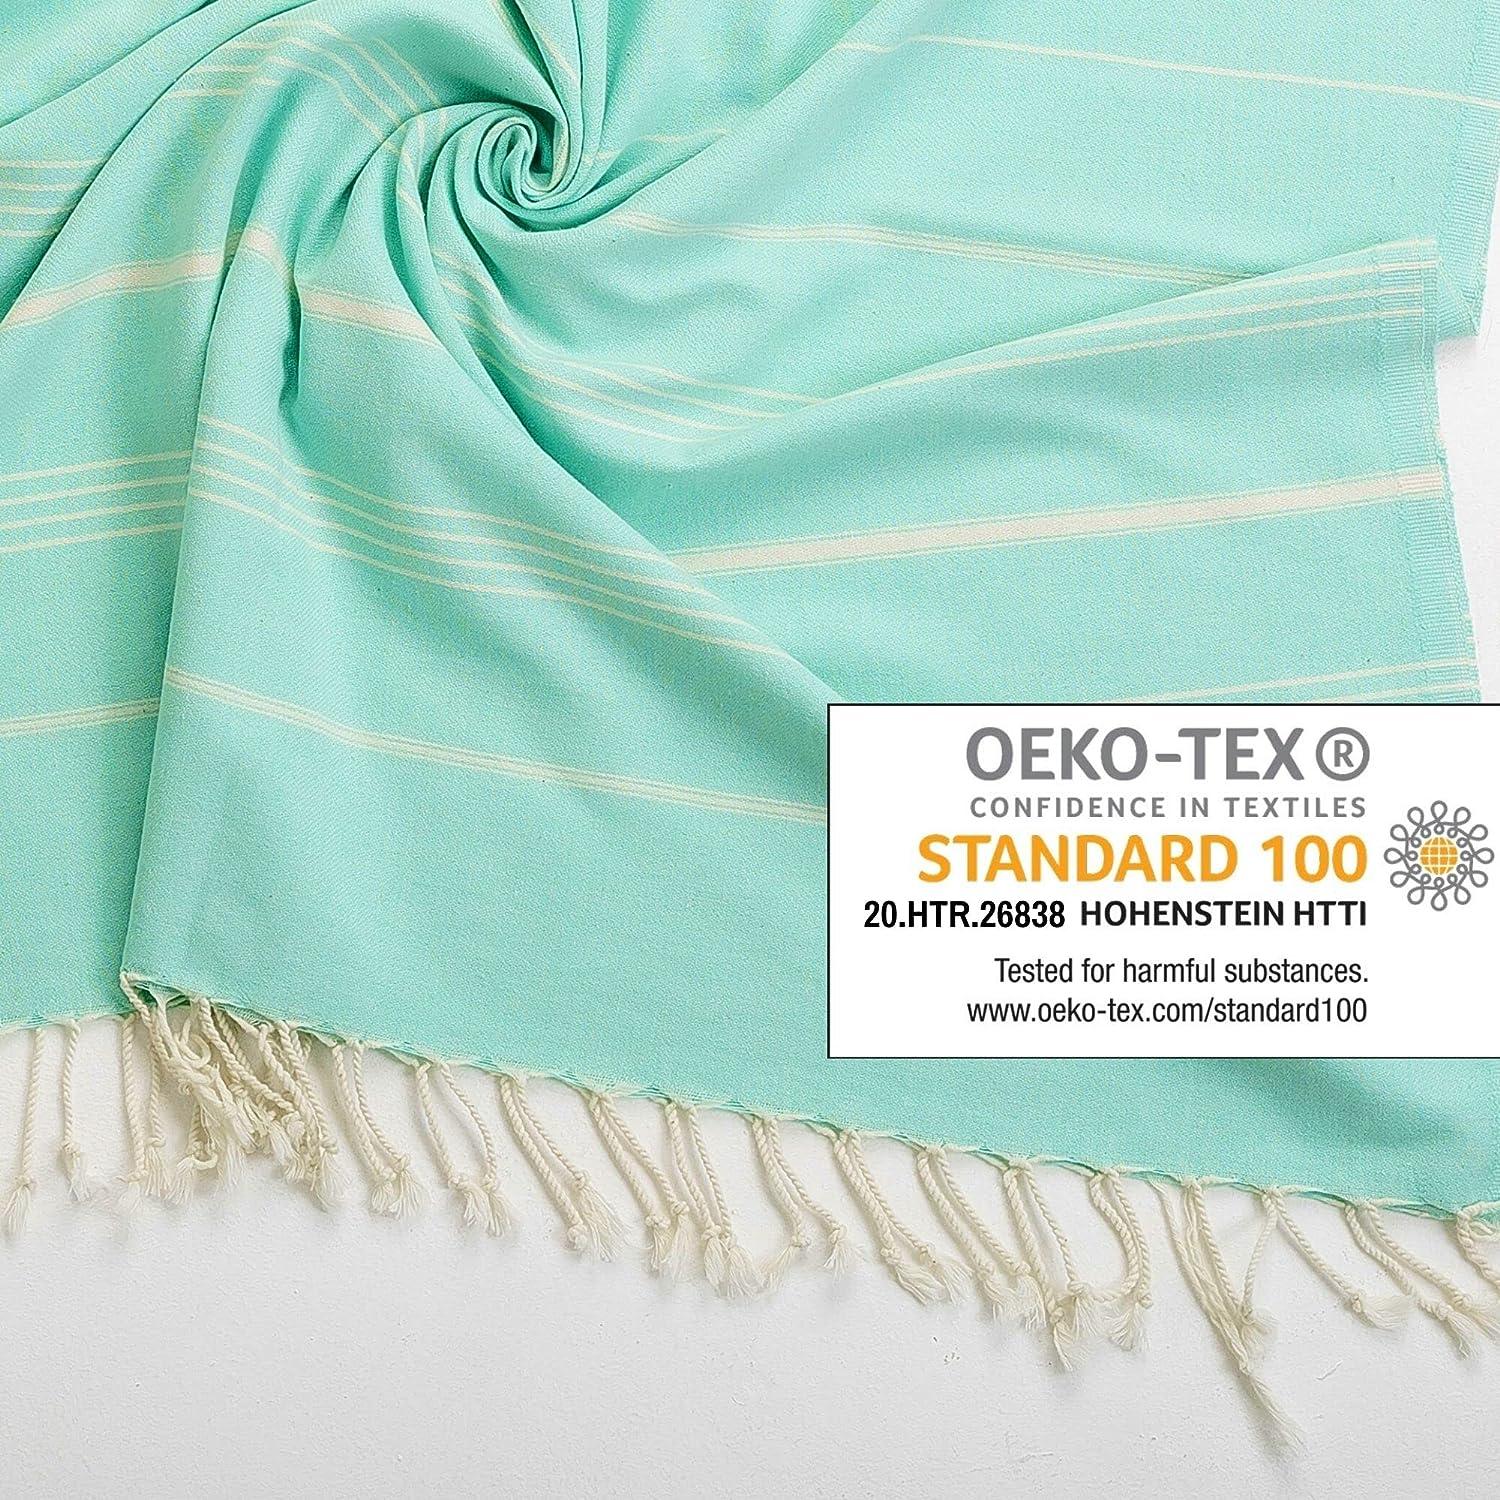 Pamuklu Turkish Bath Towels - Pure Cotton, Oversized Sand Proof